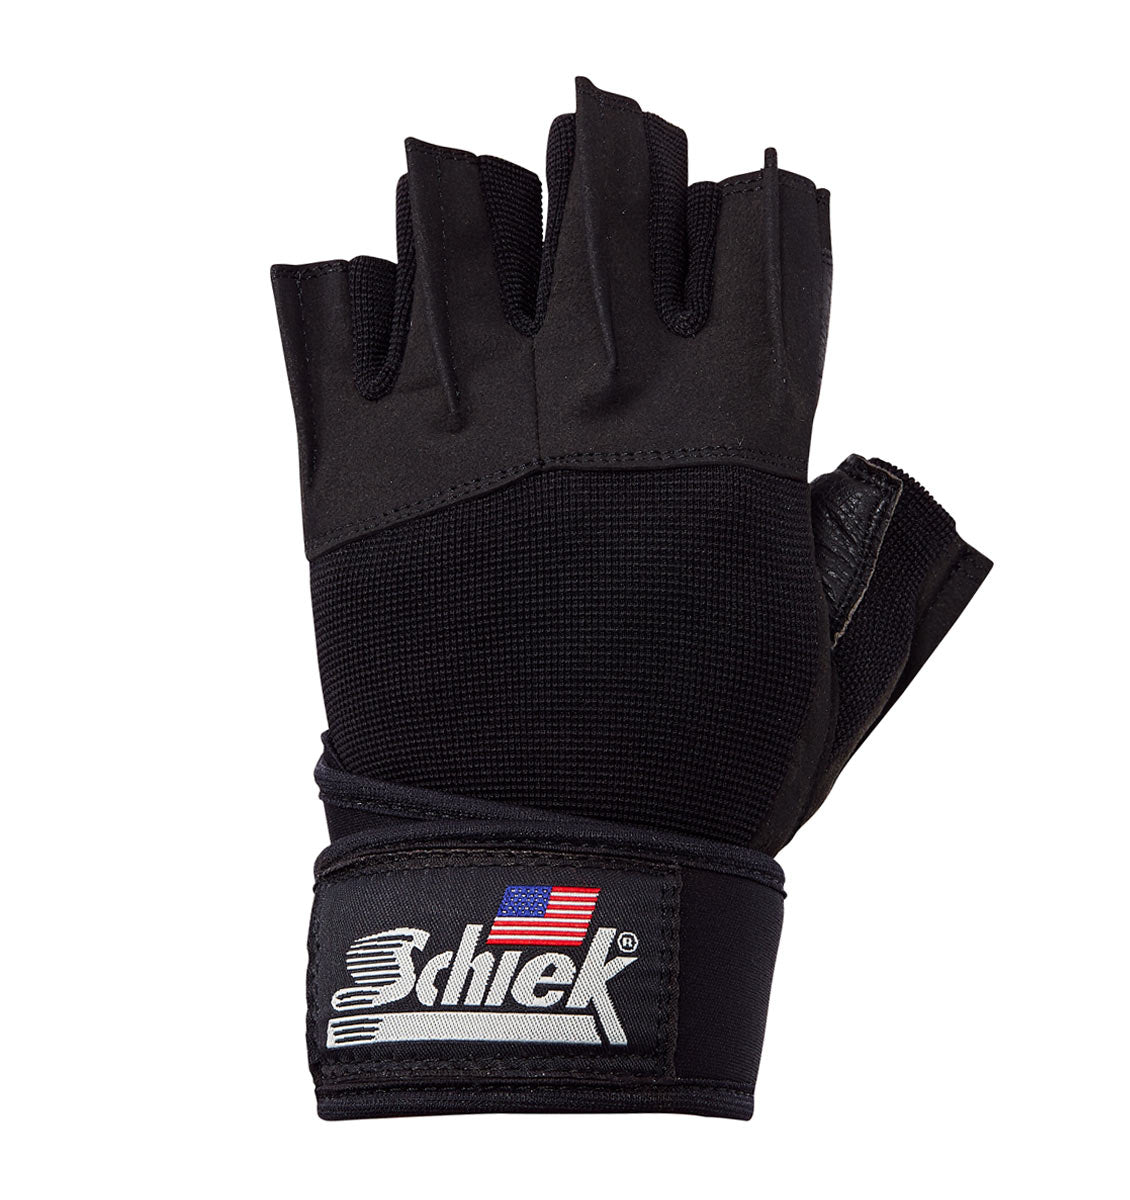 540 Schiek Platinum Series Lifting Gym Gloves with Wrist Wraps Left Top